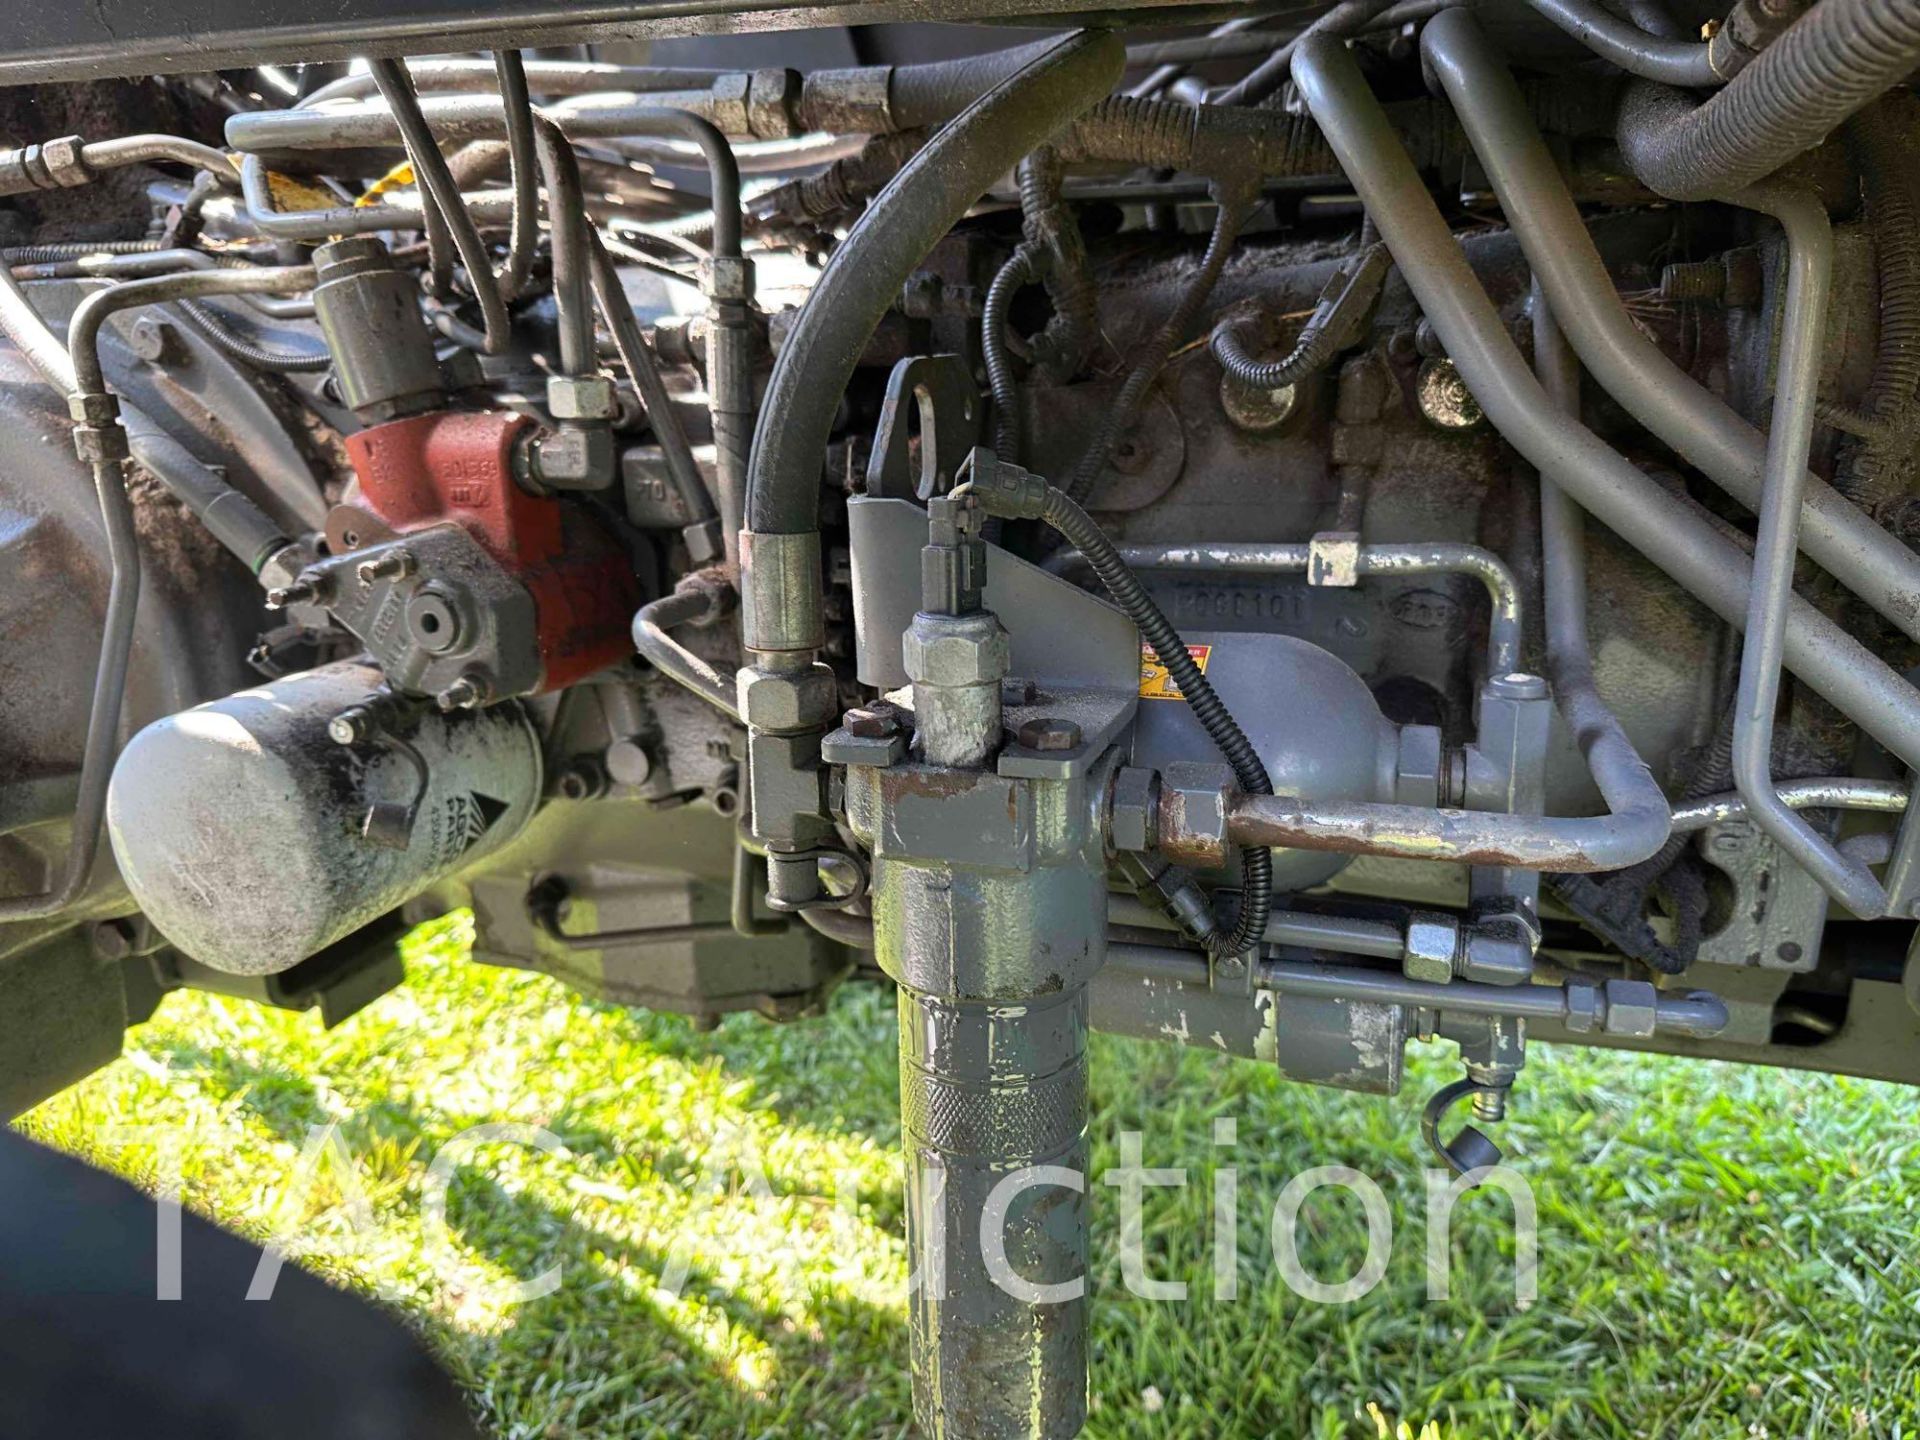 2011 Challenger MT465B 4x4 Farm Tractor - Image 15 of 37